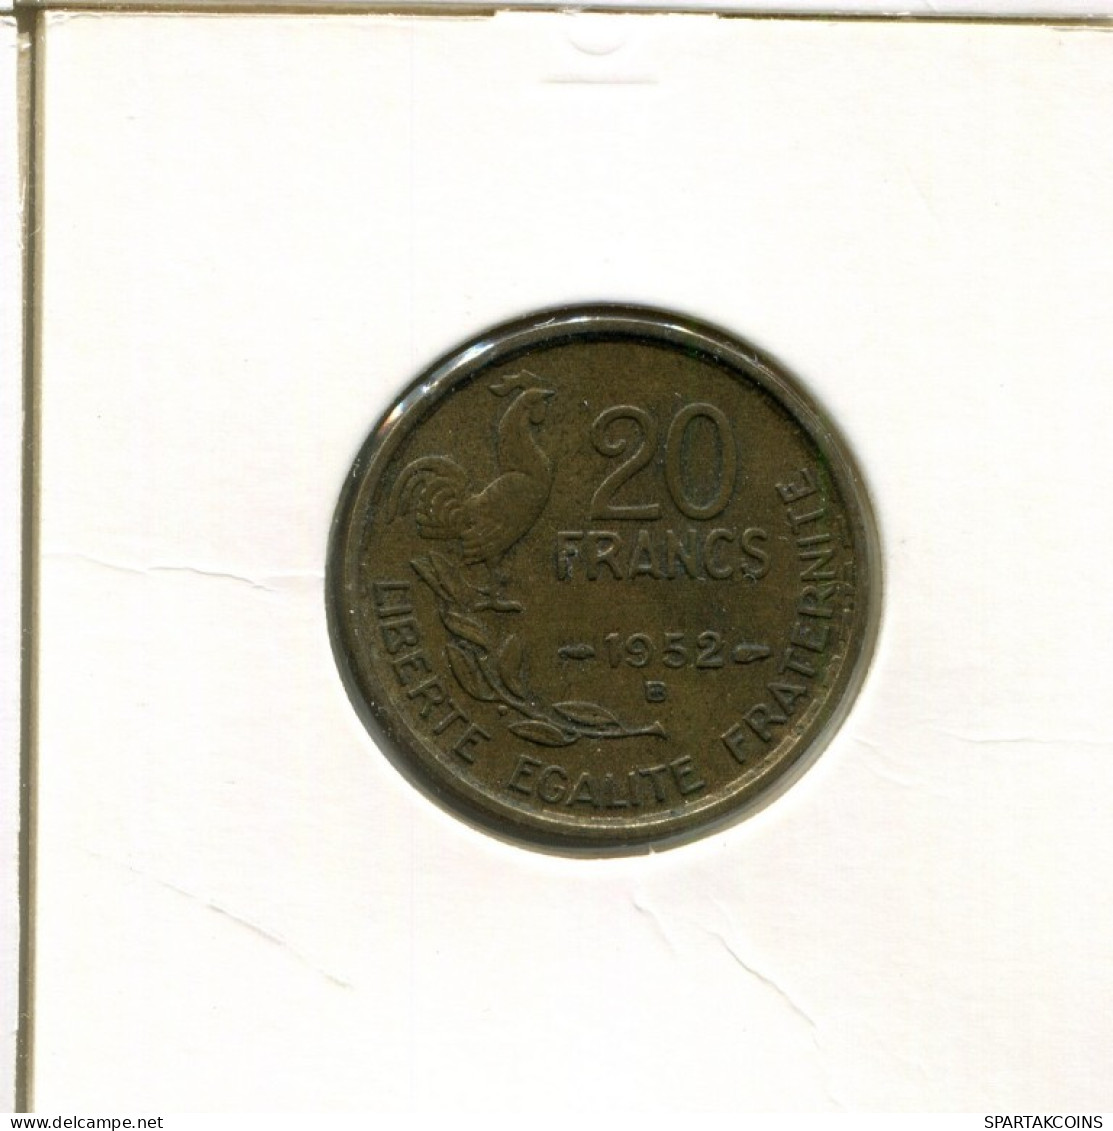 20 FRANCS 1952 B FRANKREICH FRANCE Französisch Münze #AK888.D.A - 20 Francs